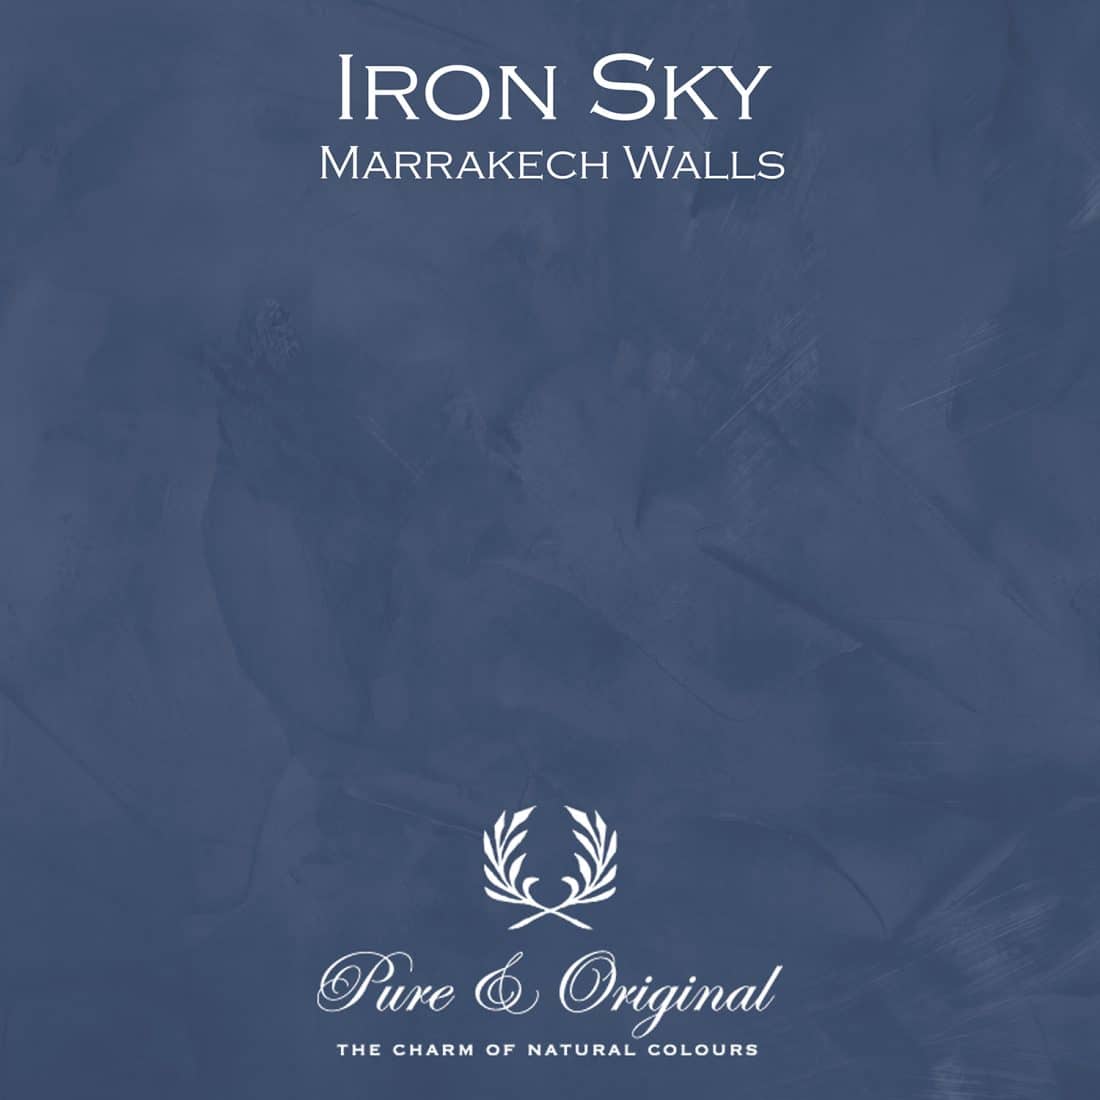 Iron Sky Marrakech Walls